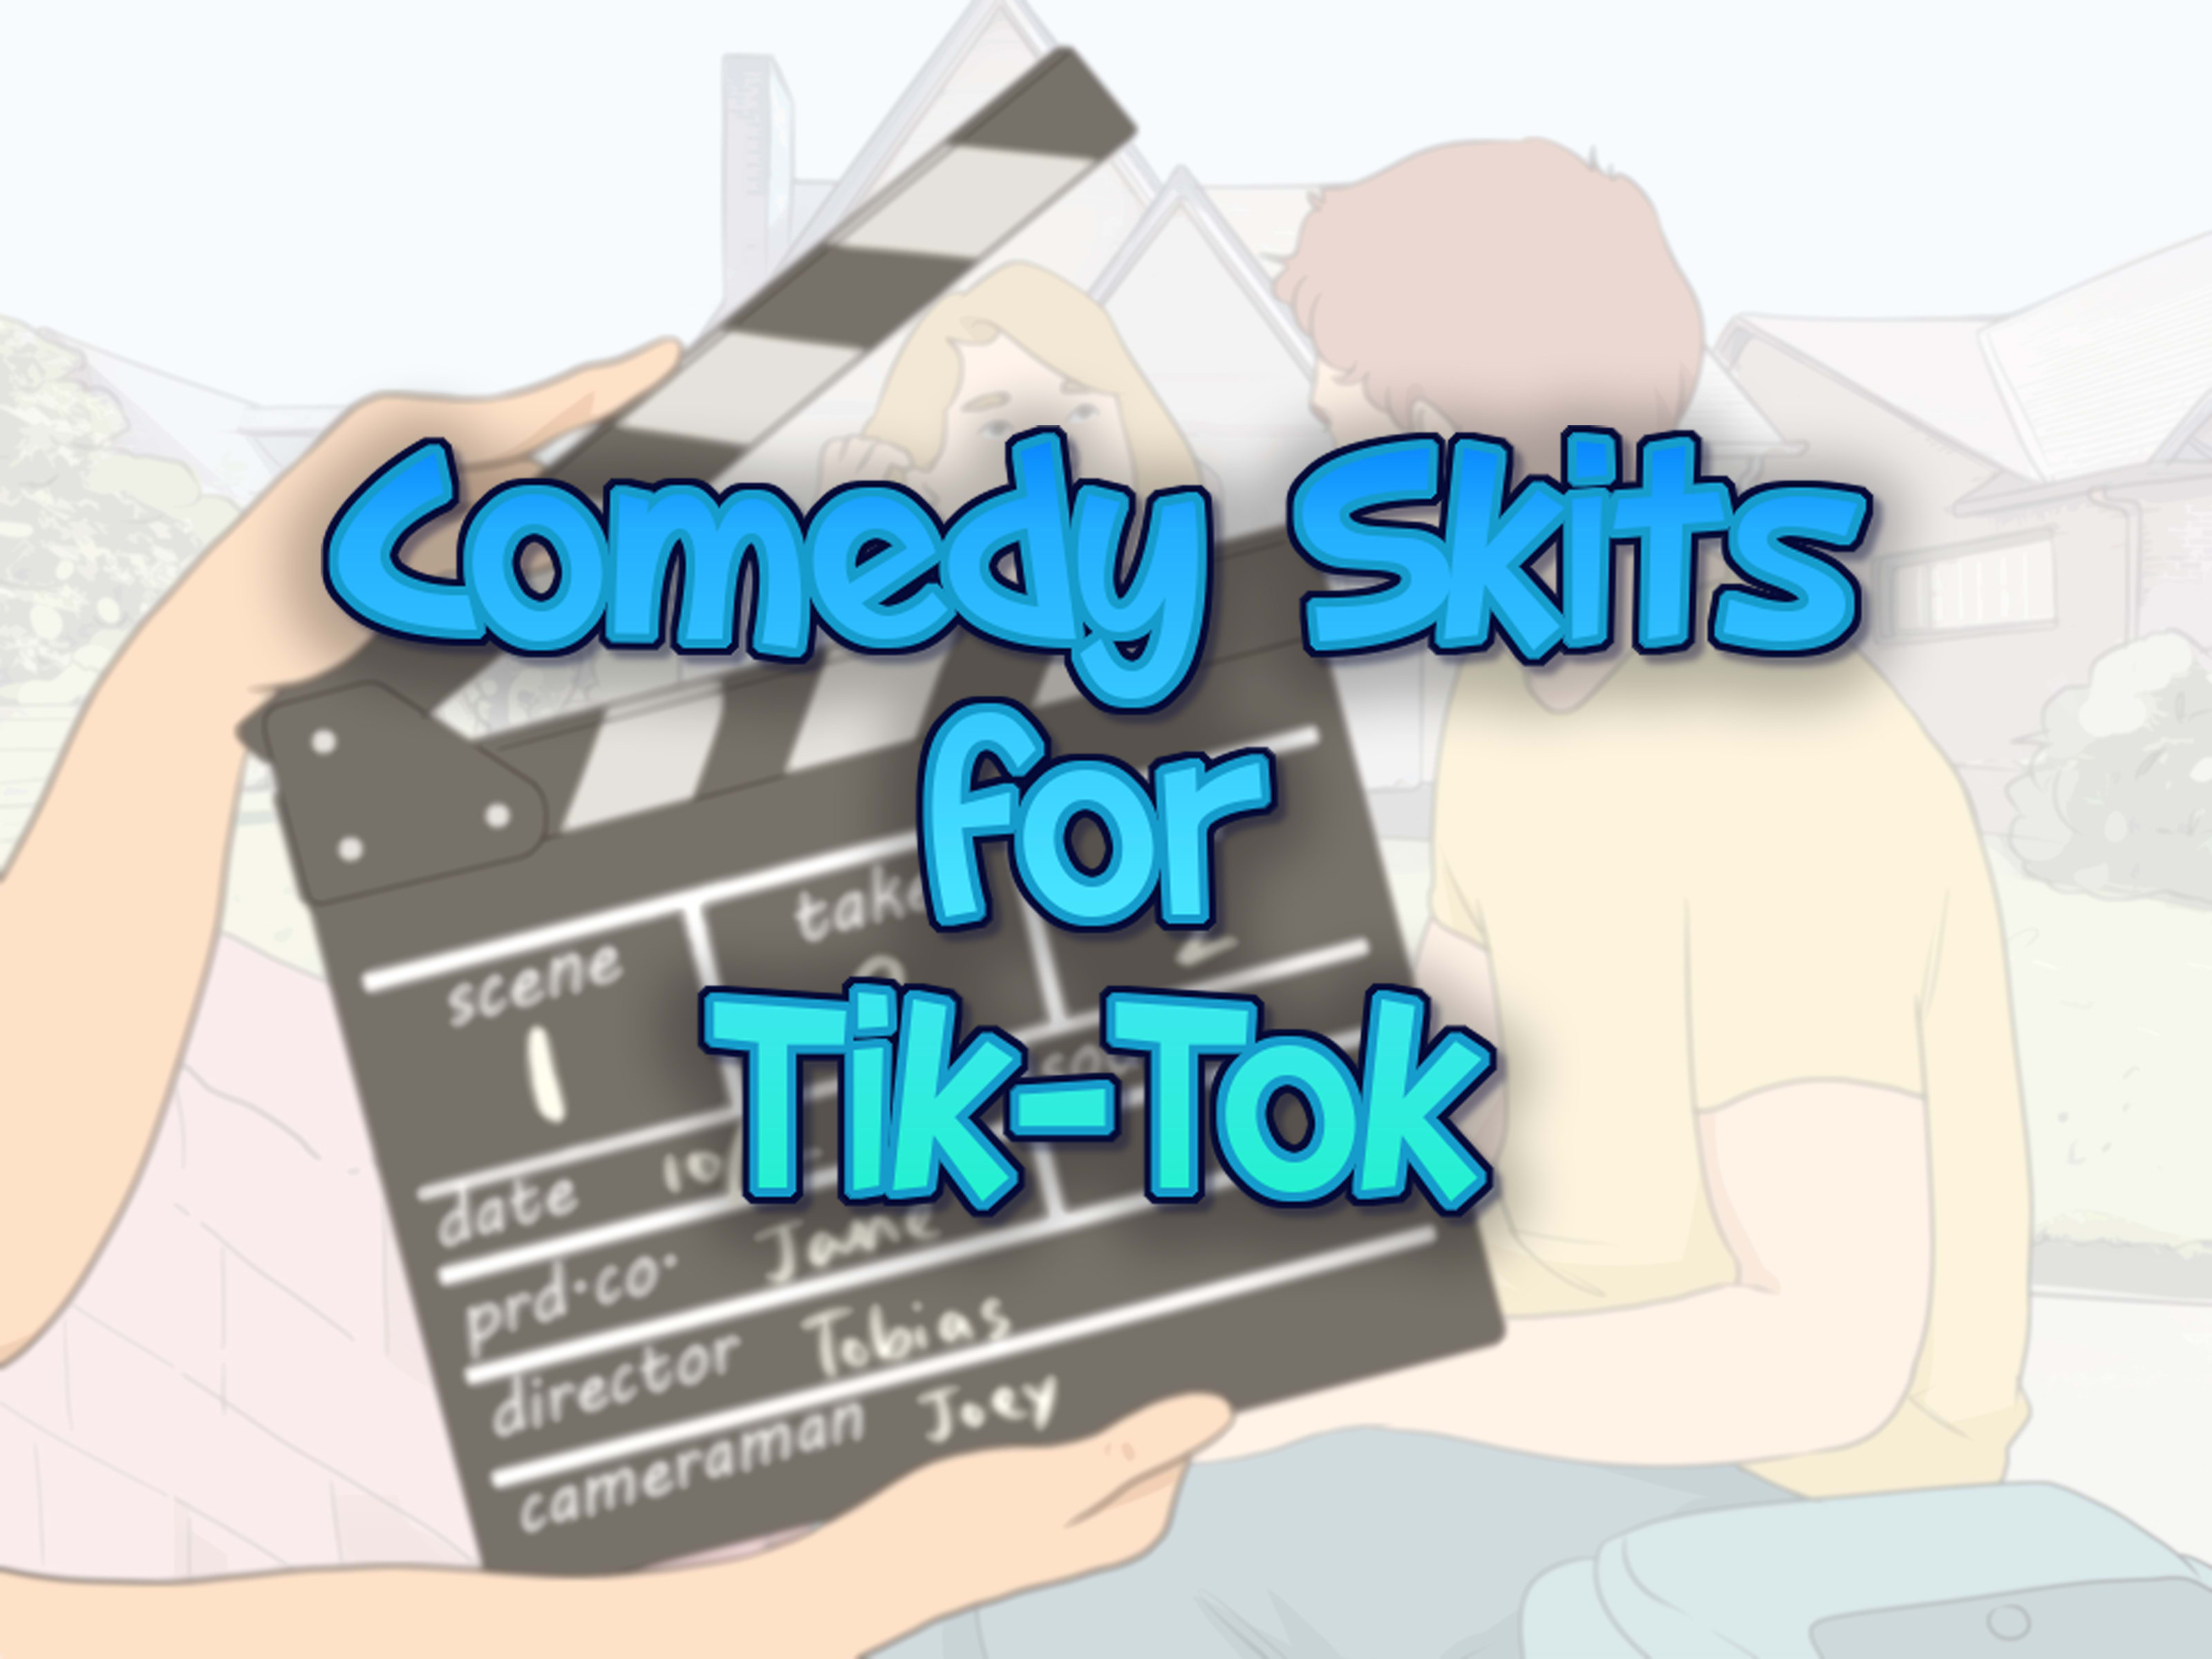 Write comedy skits for tik tok by Jordangascon | Fiverr